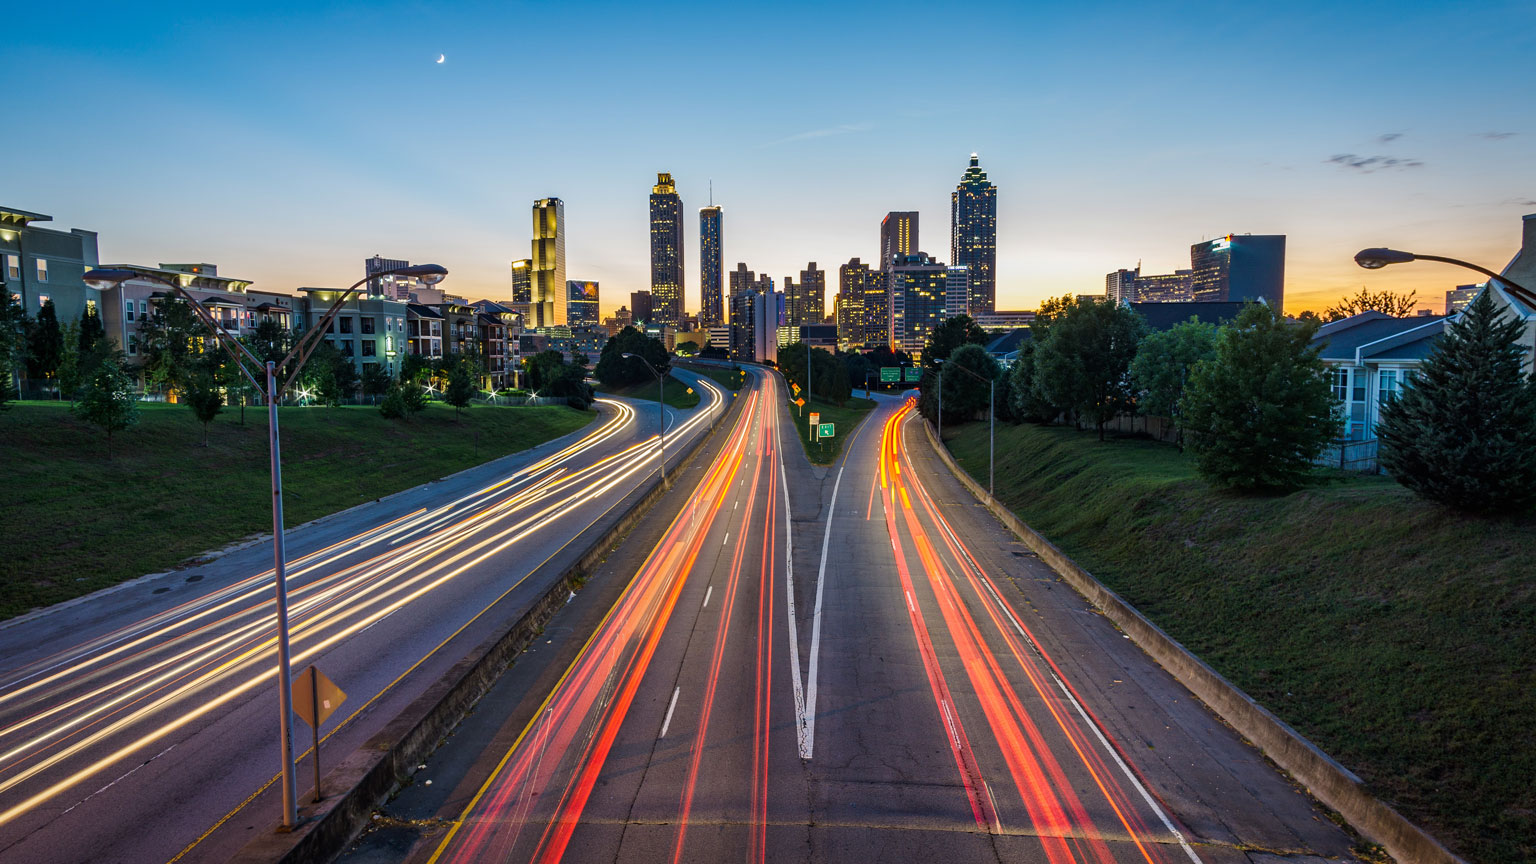 View of Atlanta from the Jackson St Bridge.